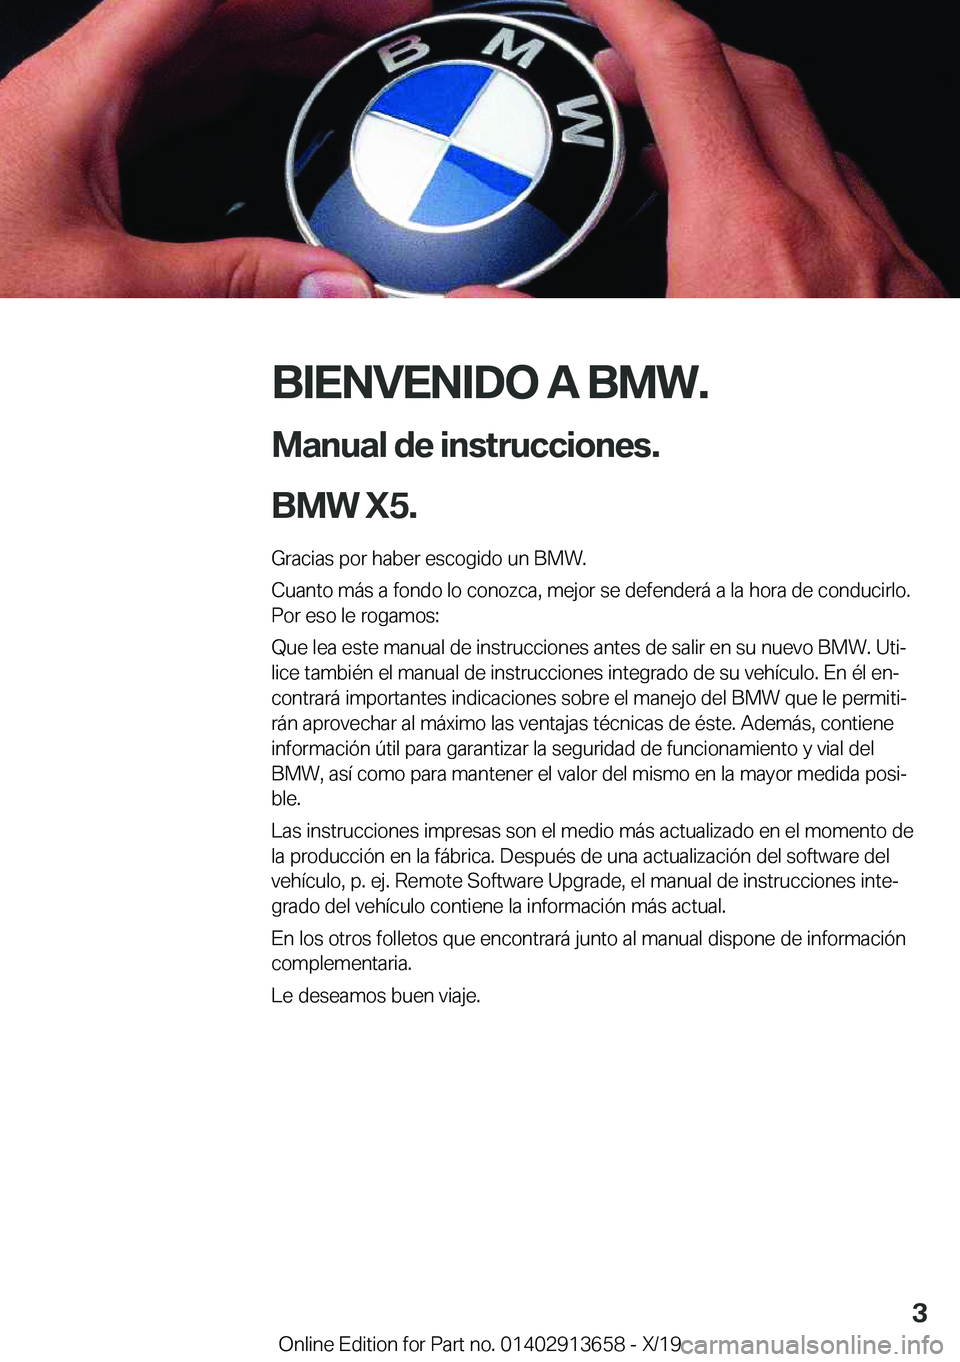 BMW X5 2020  Manuales de Empleo (in Spanish) �B�I�E�N�V�E�N�I�D�O��A��B�M�W�.
�M�a�n�u�a�l��d�e��i�n�s�t�r�u�c�c�i�o�n�e�s�.
�B�M�W��X�5�. �G�r�a�c�i�a�s��p�o�r��h�a�b�e�r��e�s�c�o�g�i�d�o��u�n��B�M�W�.�C�u�a�n�t�o��m�